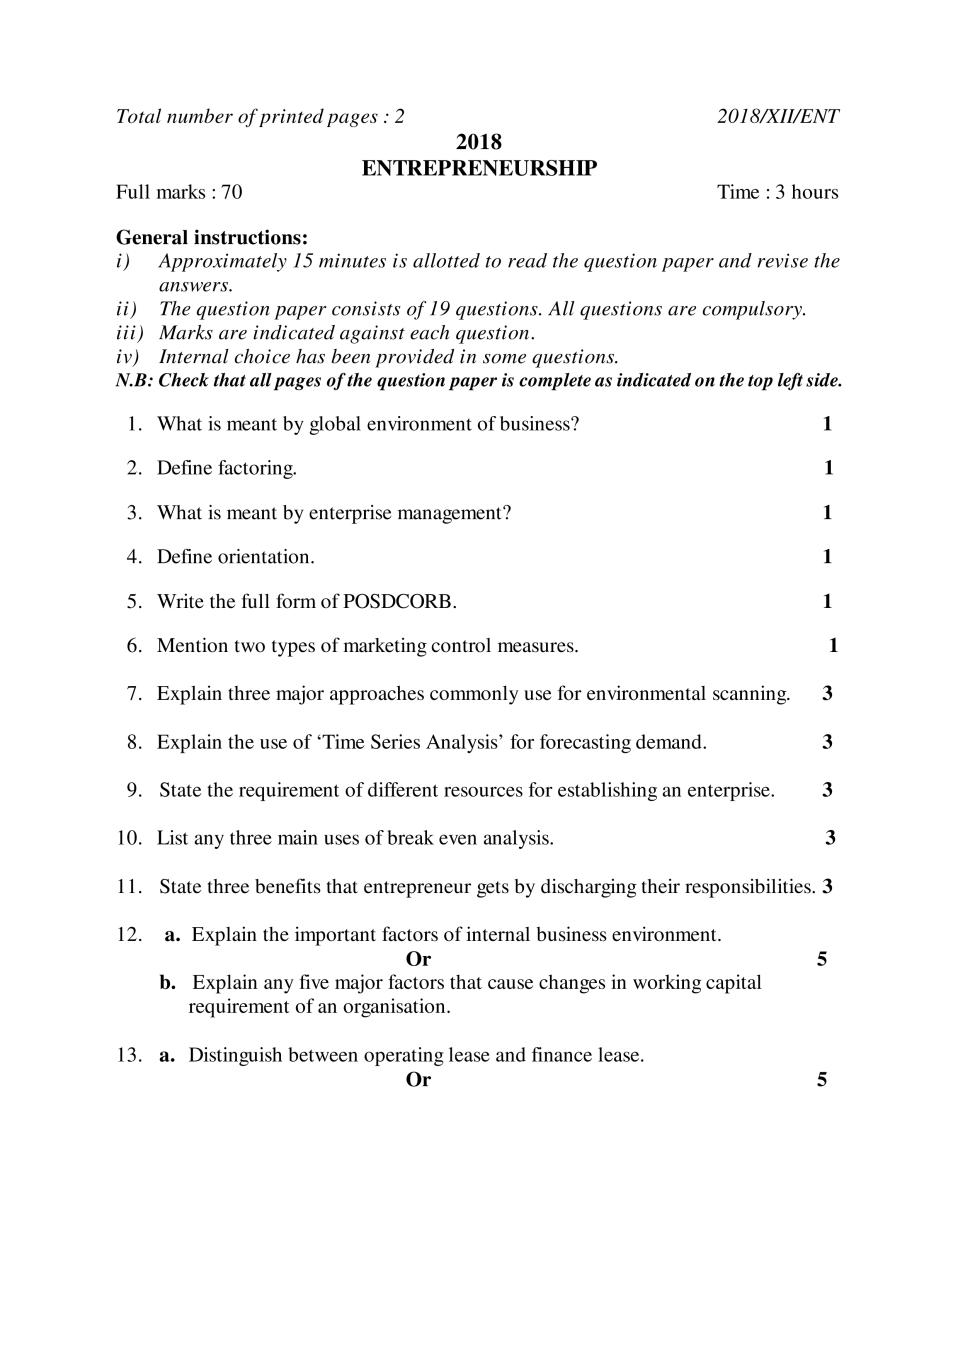 NBSE Class 12 Question Paper 2018 for Entrepreneurship - Page 1